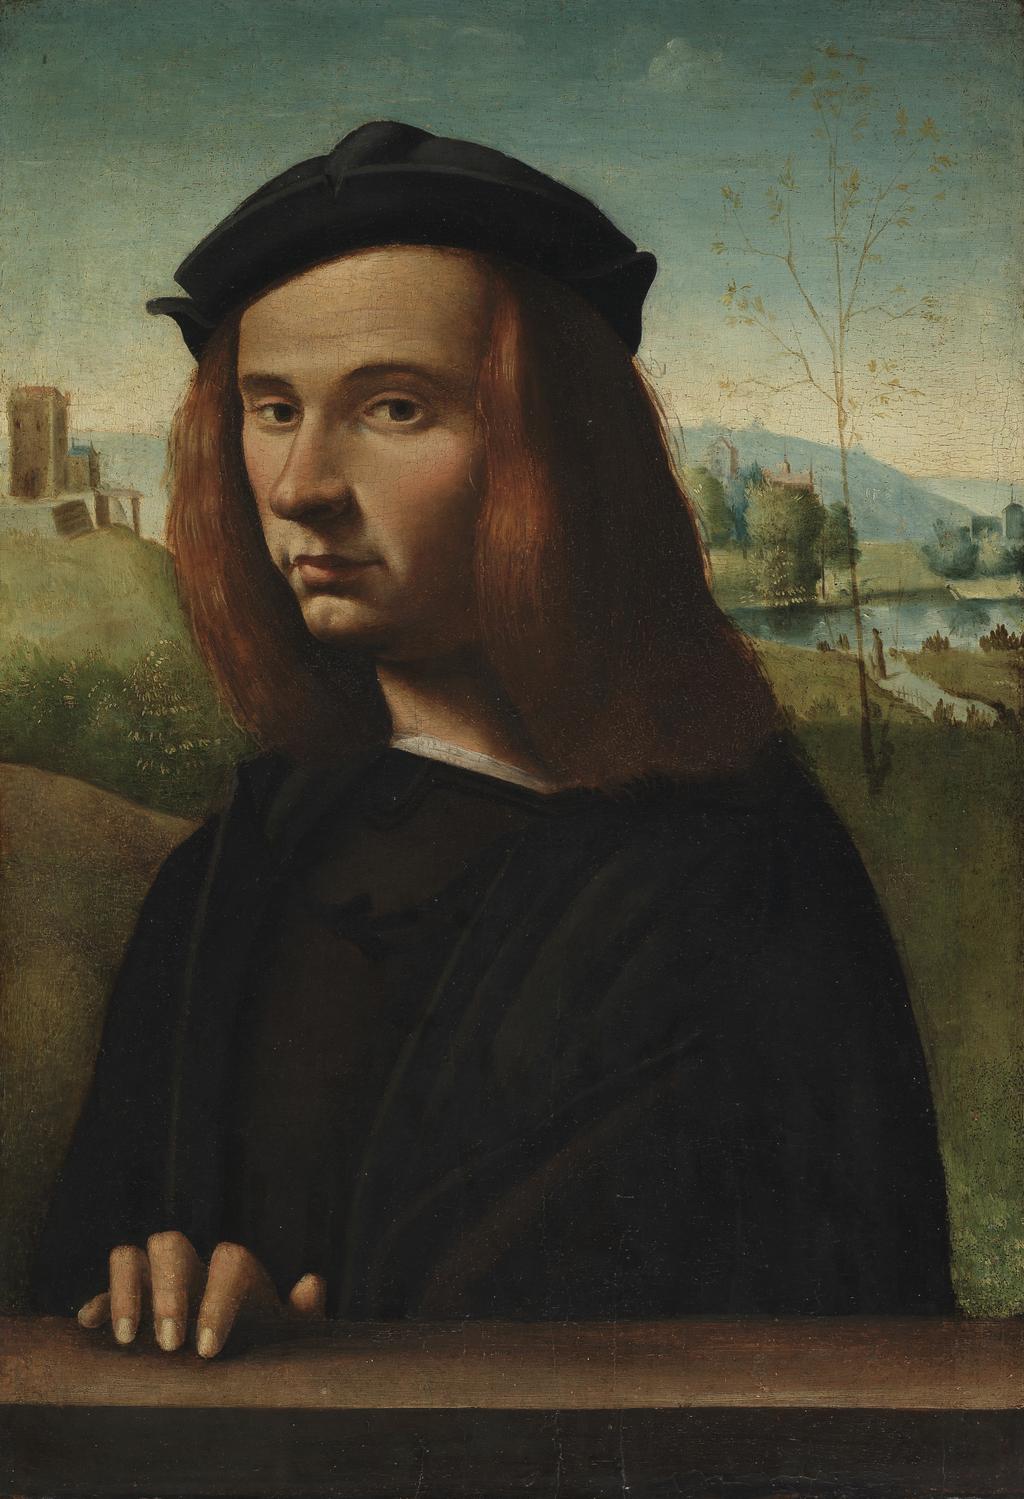 An image of Portrait of a young man. Ghirlandaio, Ridolfo (Ridolfo di Domenico Bigordi), (Italian, 1483-1561). Oil on panel, height 52.1 cm, width 36.2 cm, circa 1500. Florentine School.